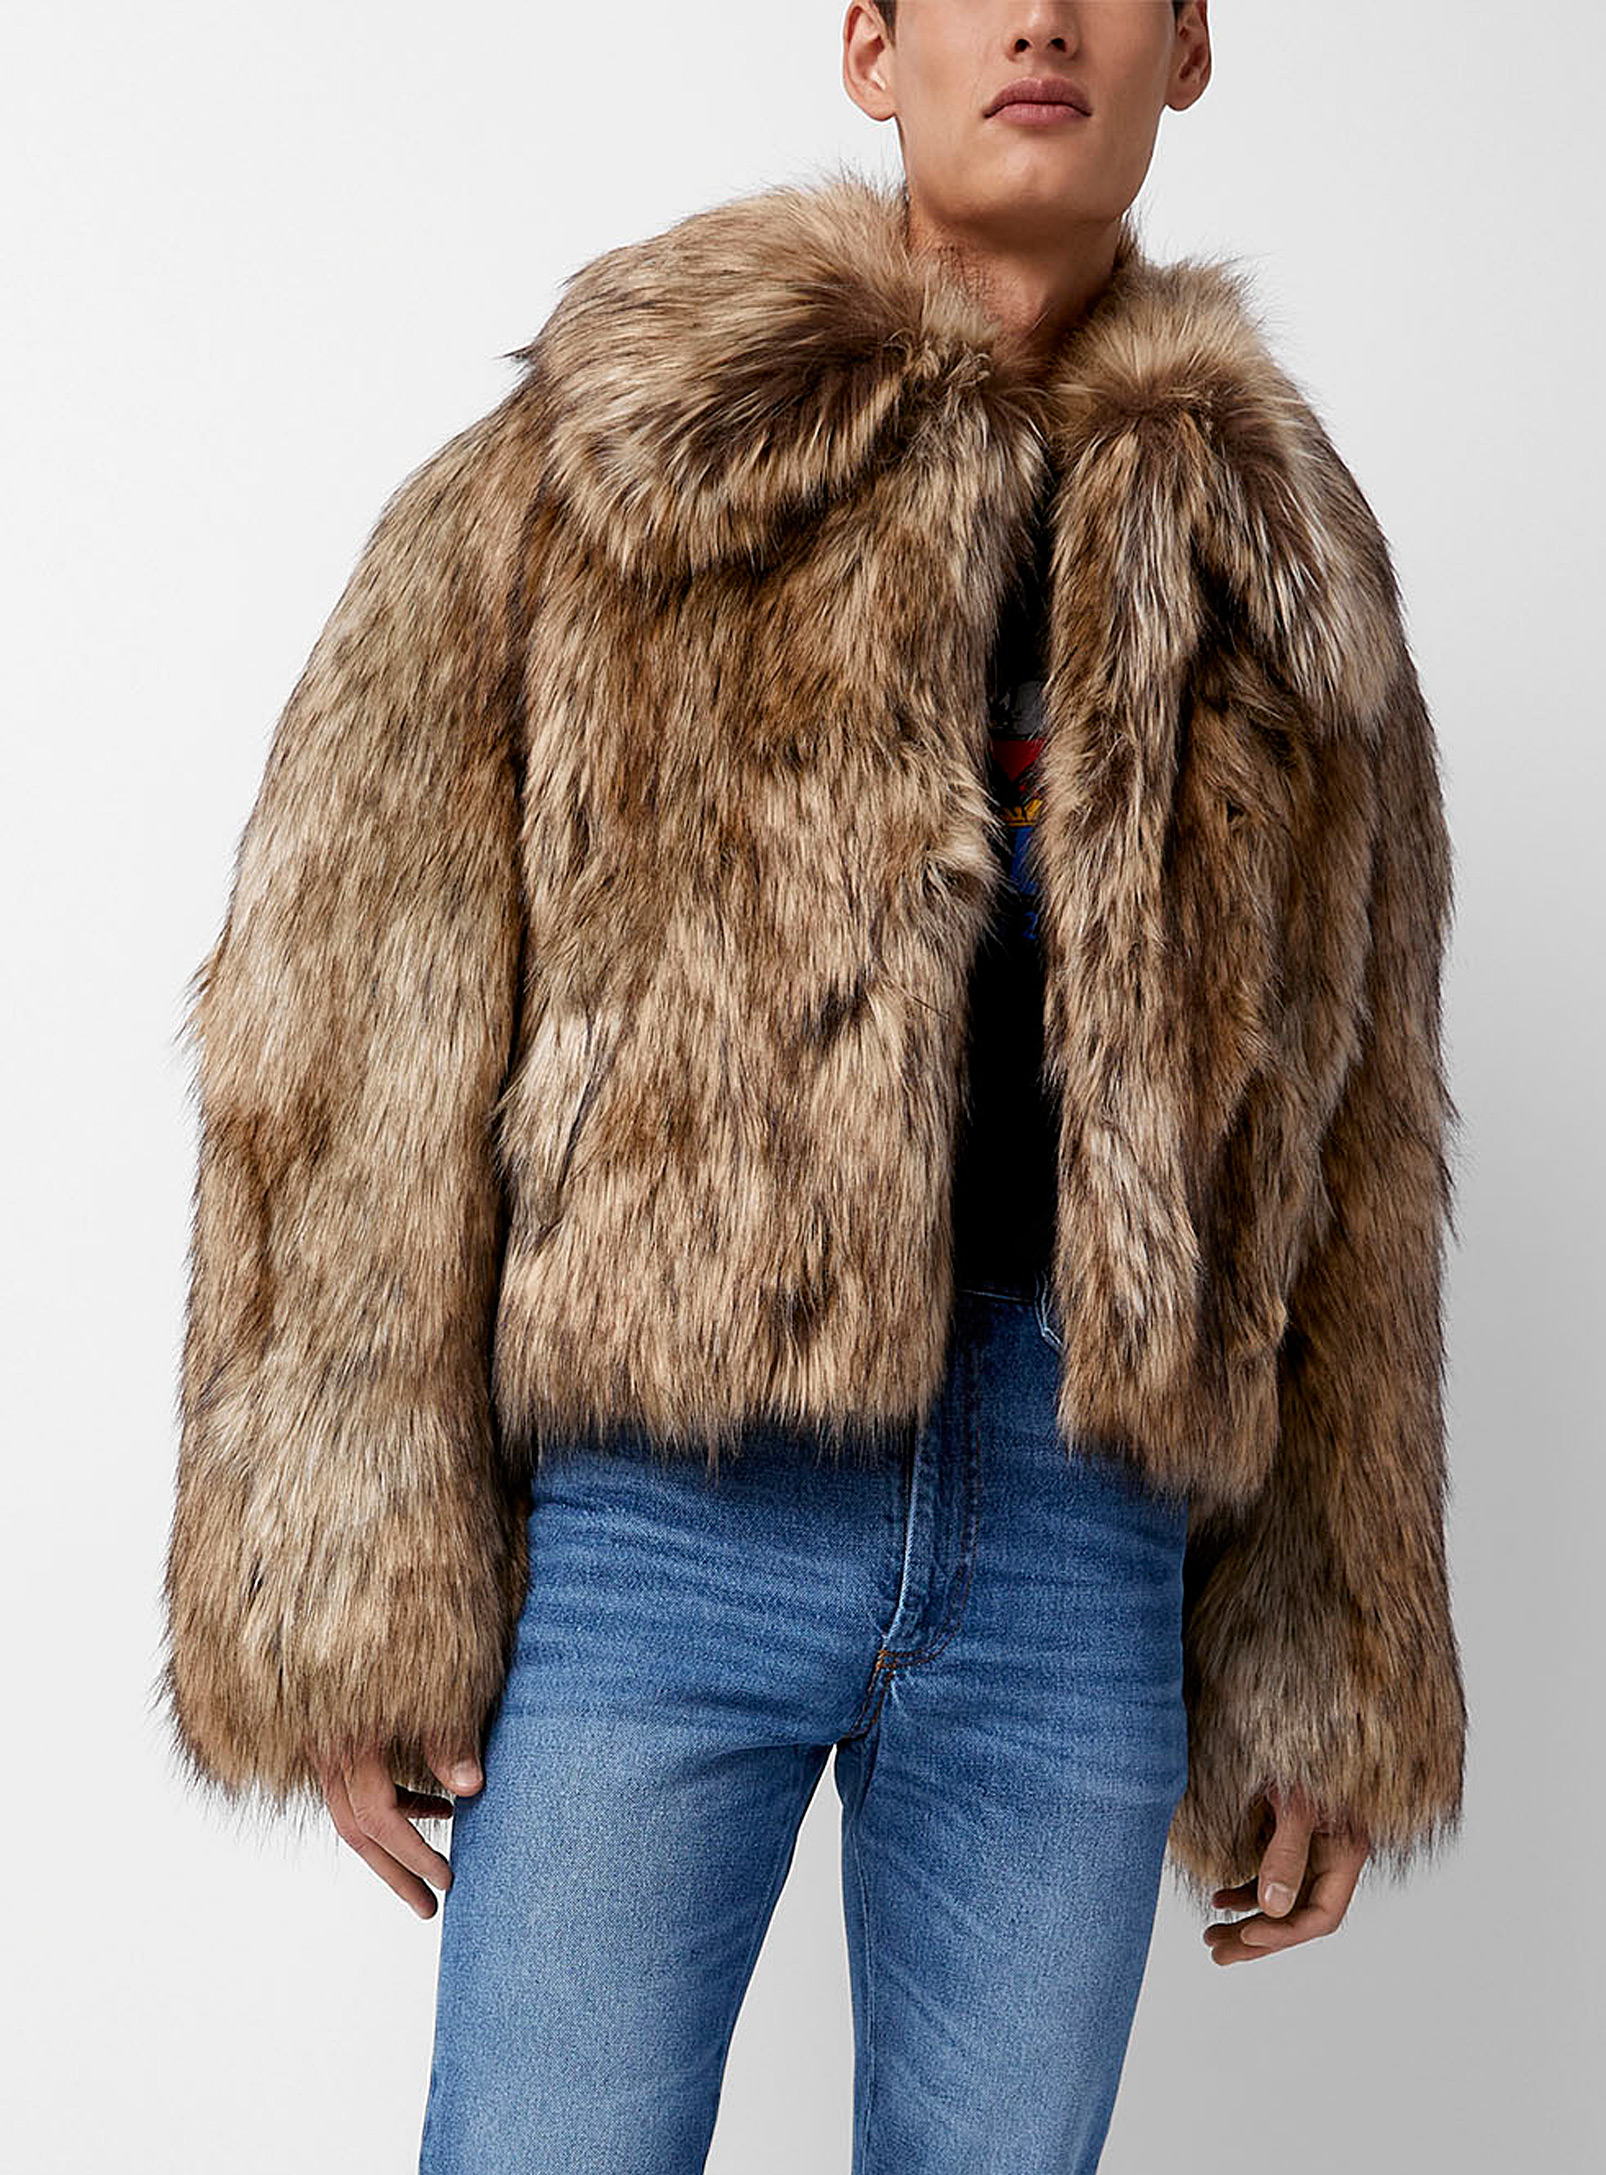 Egonlab - Men's Faux-fur cropped jacket